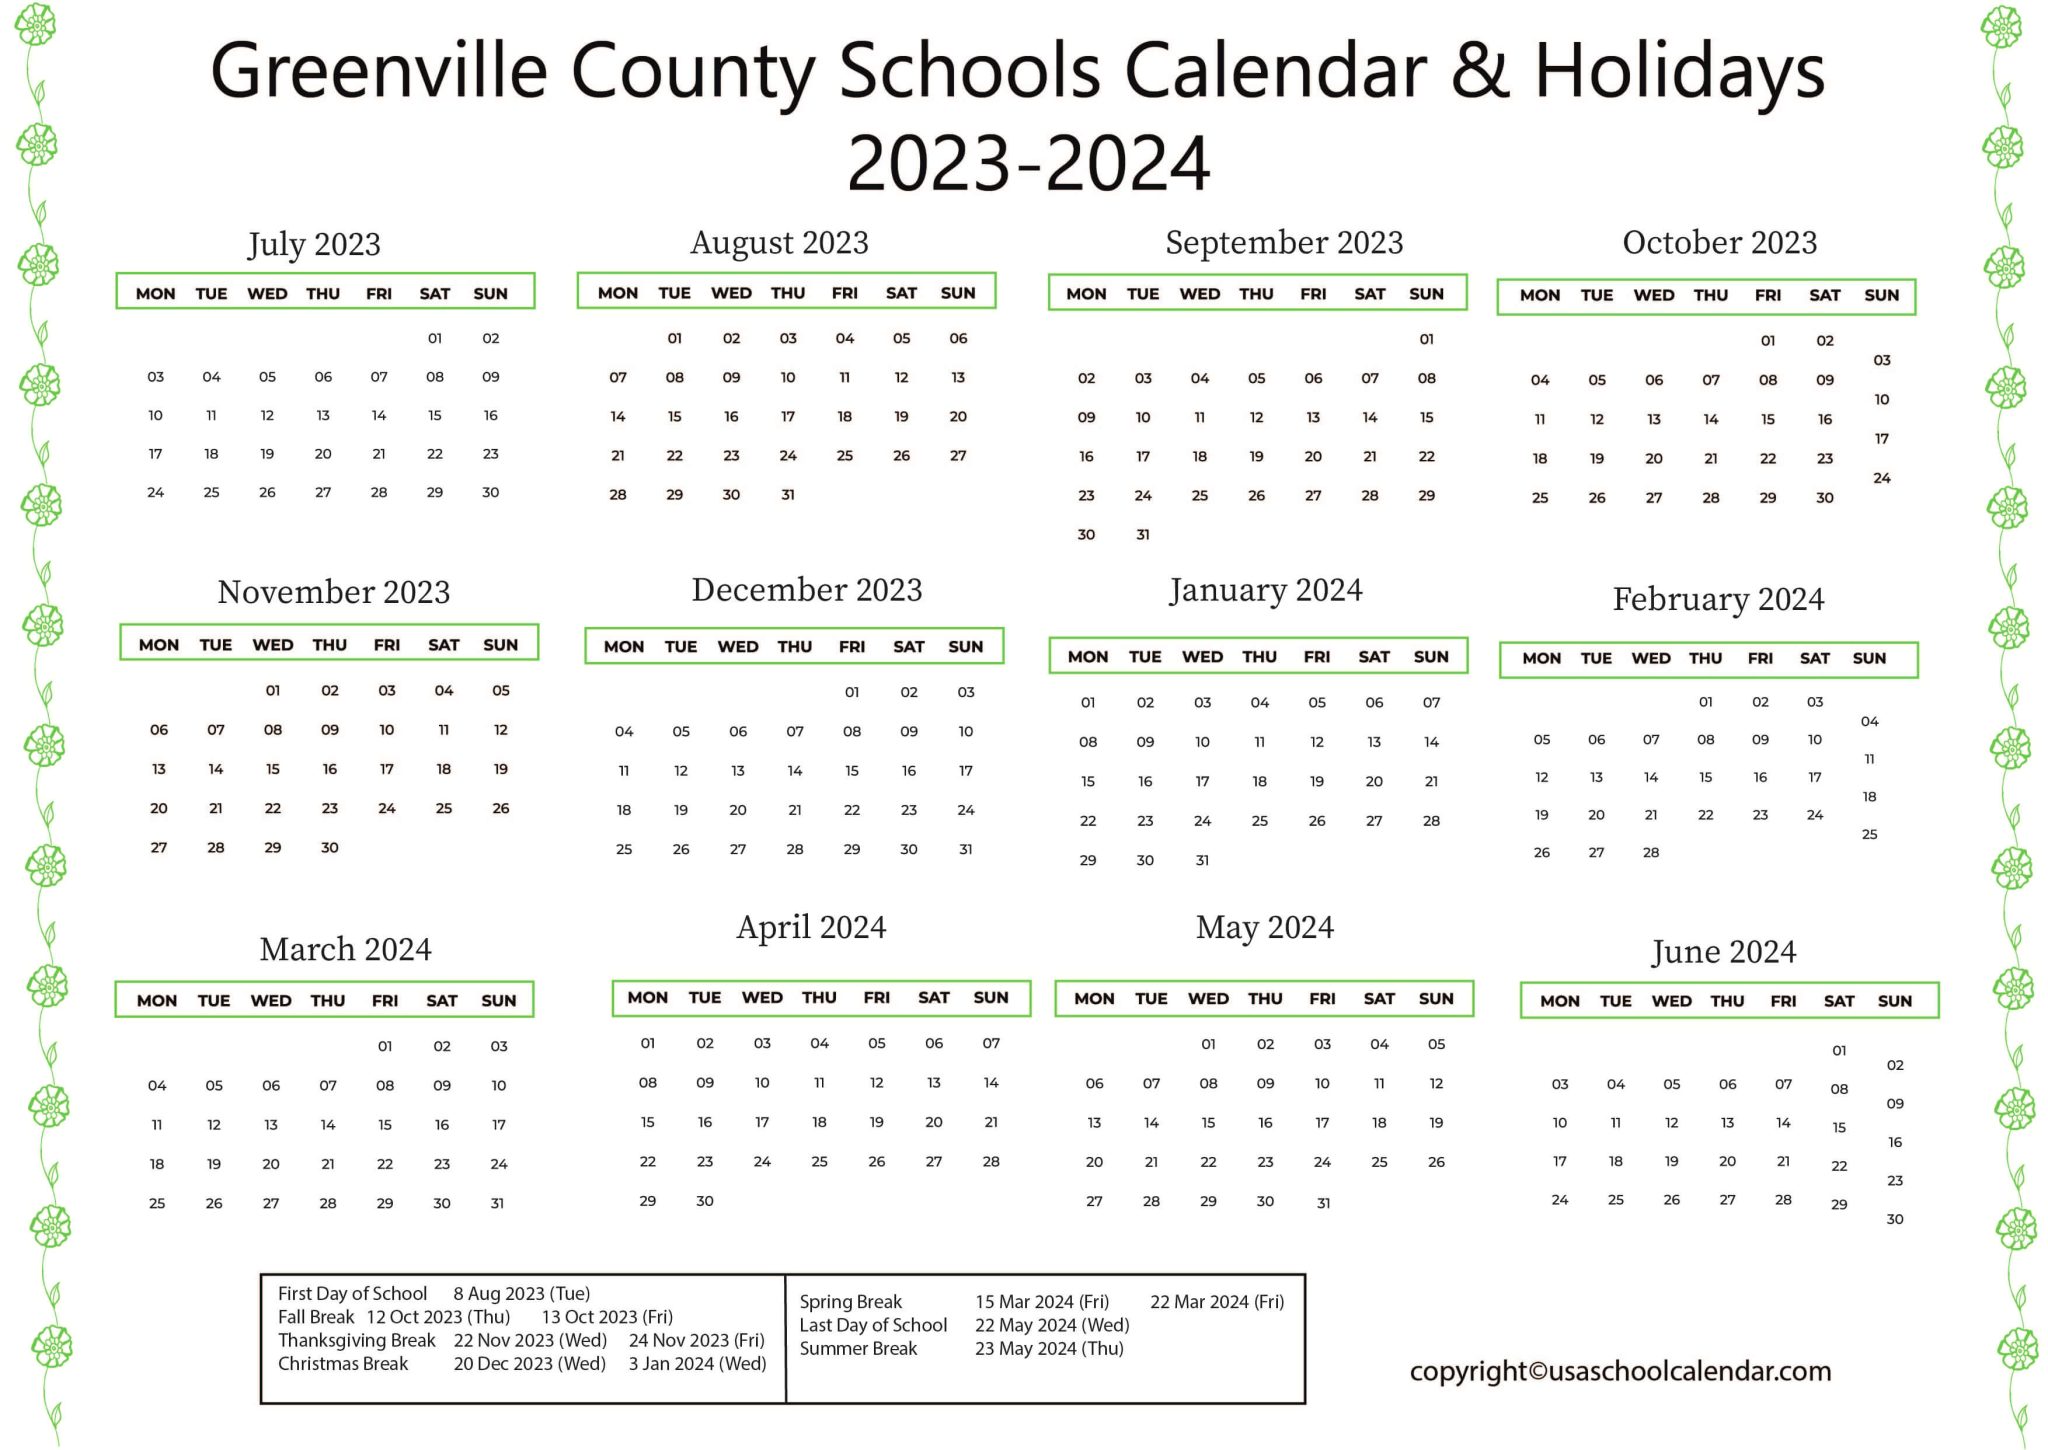 greenville-county-schools-calendar-holidays-2023-2024